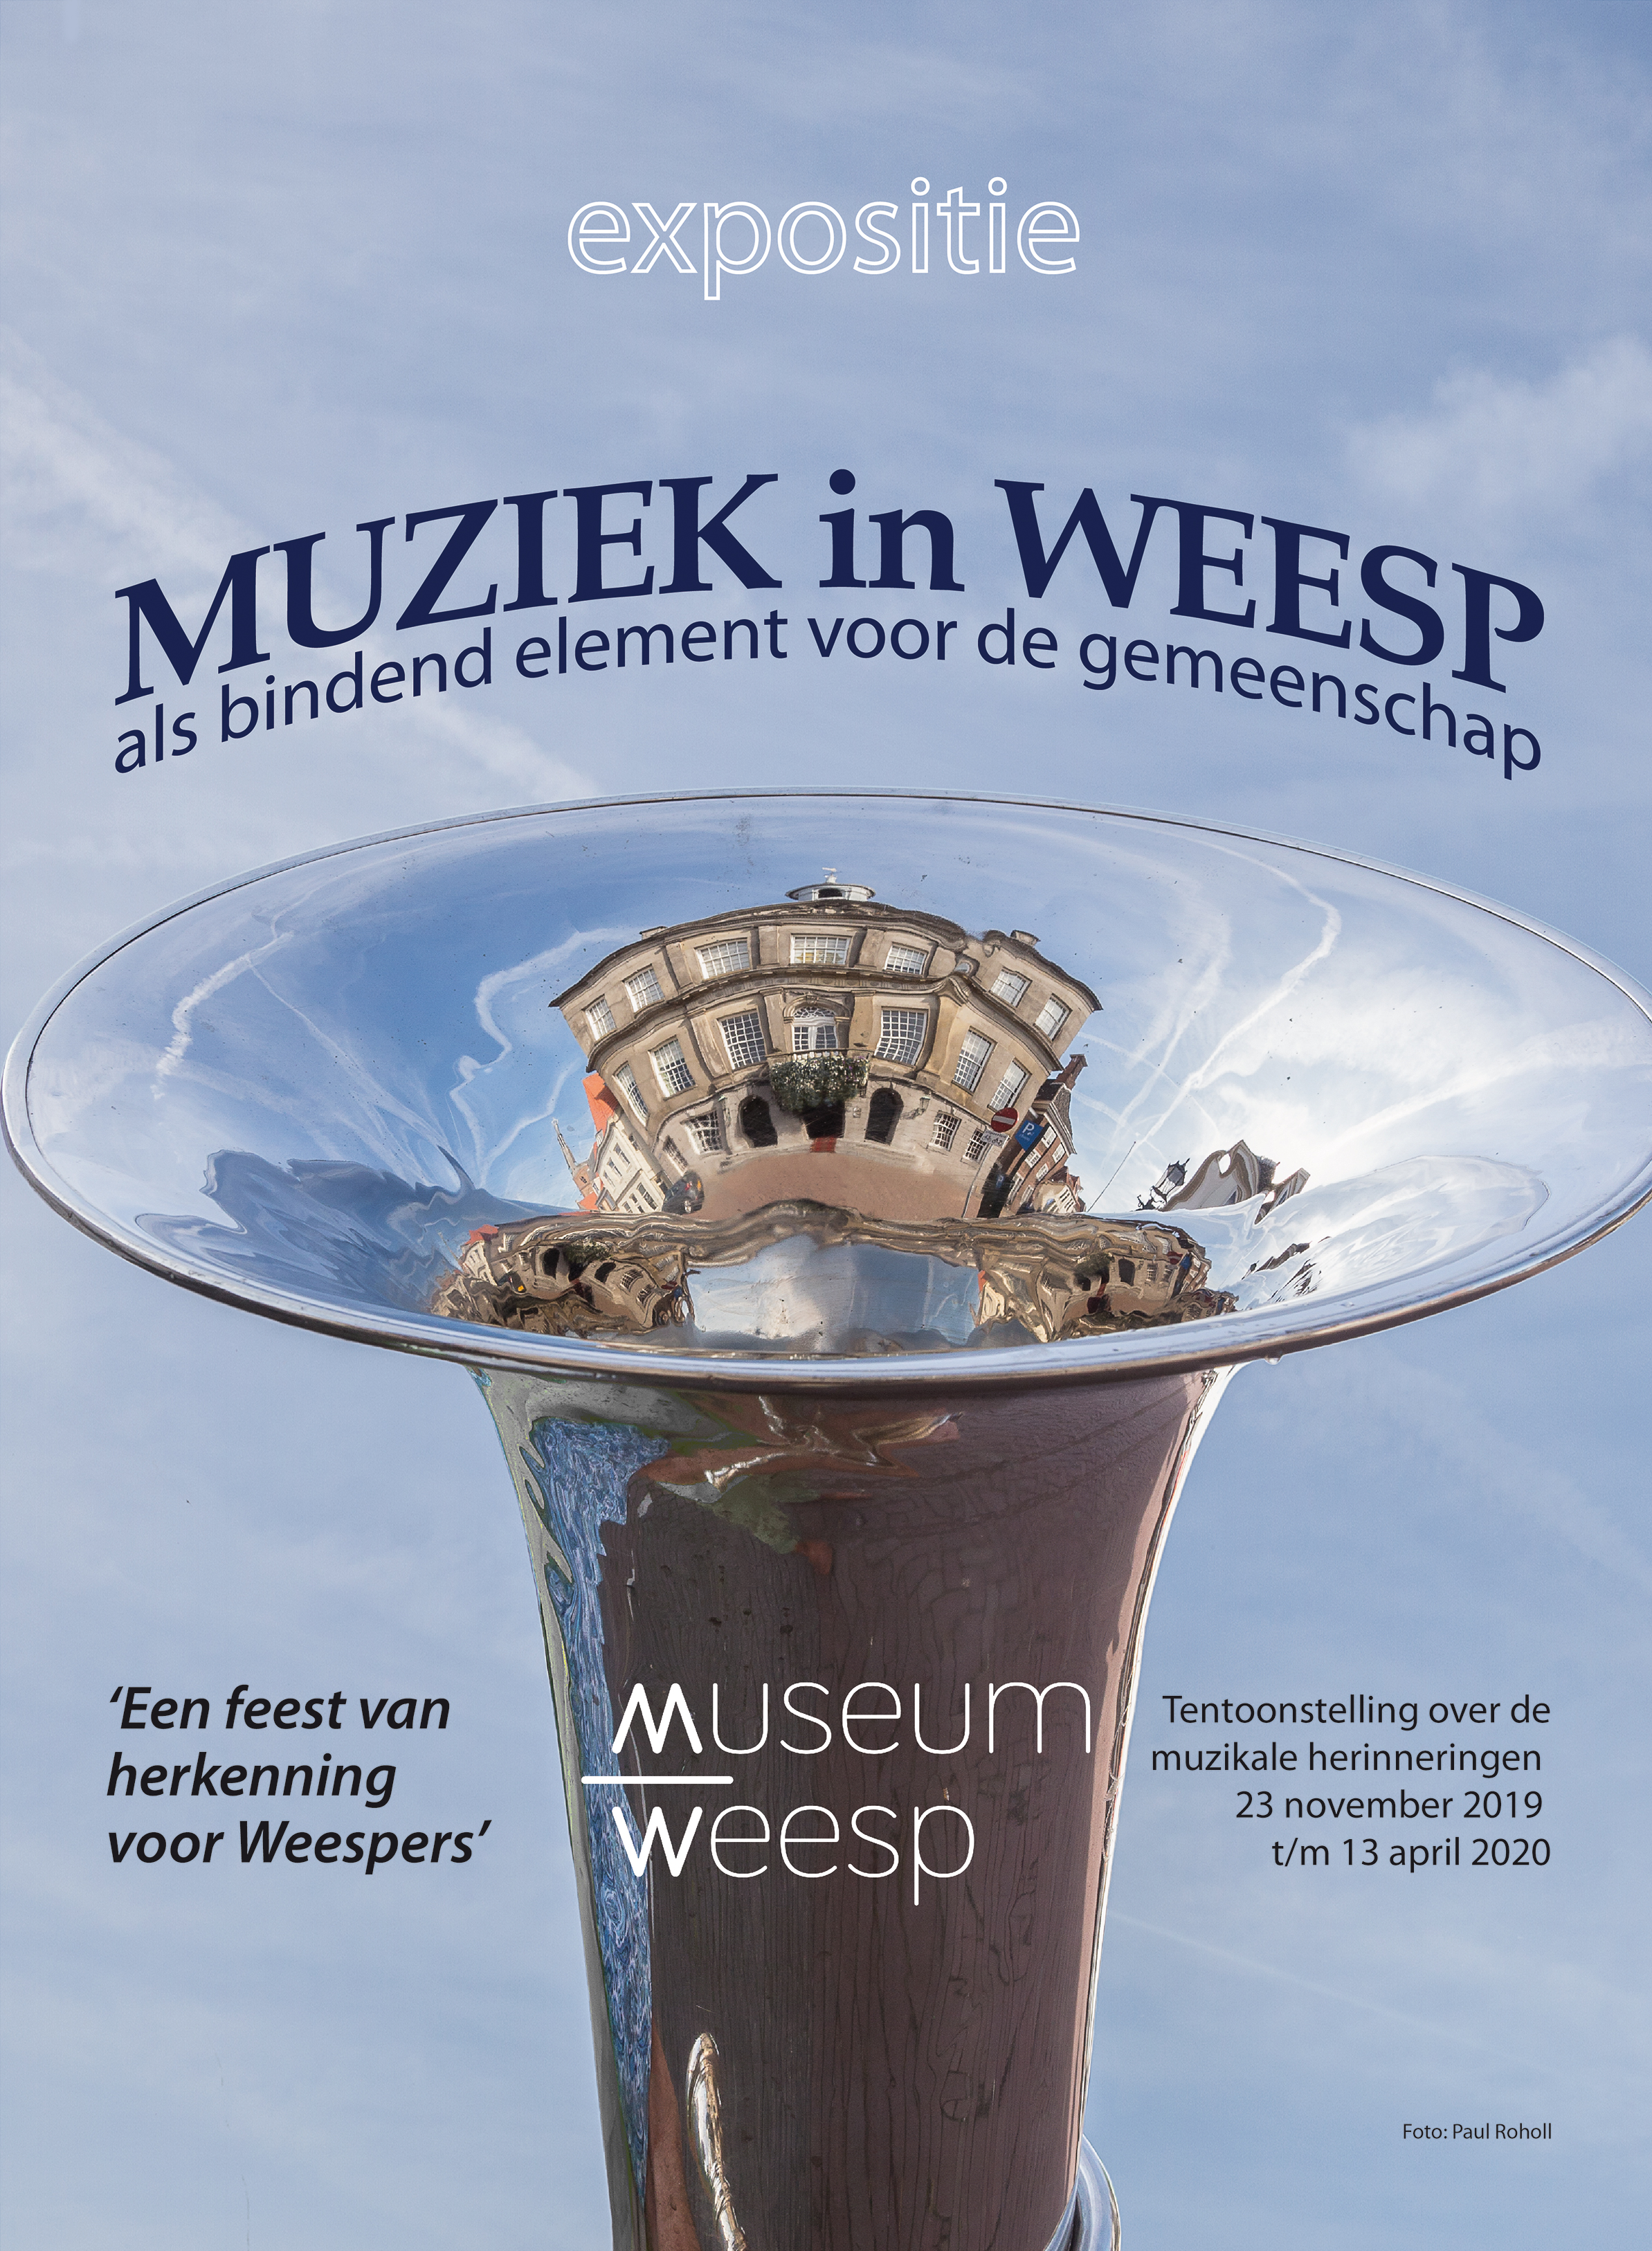 (c) Museumweesp.nl